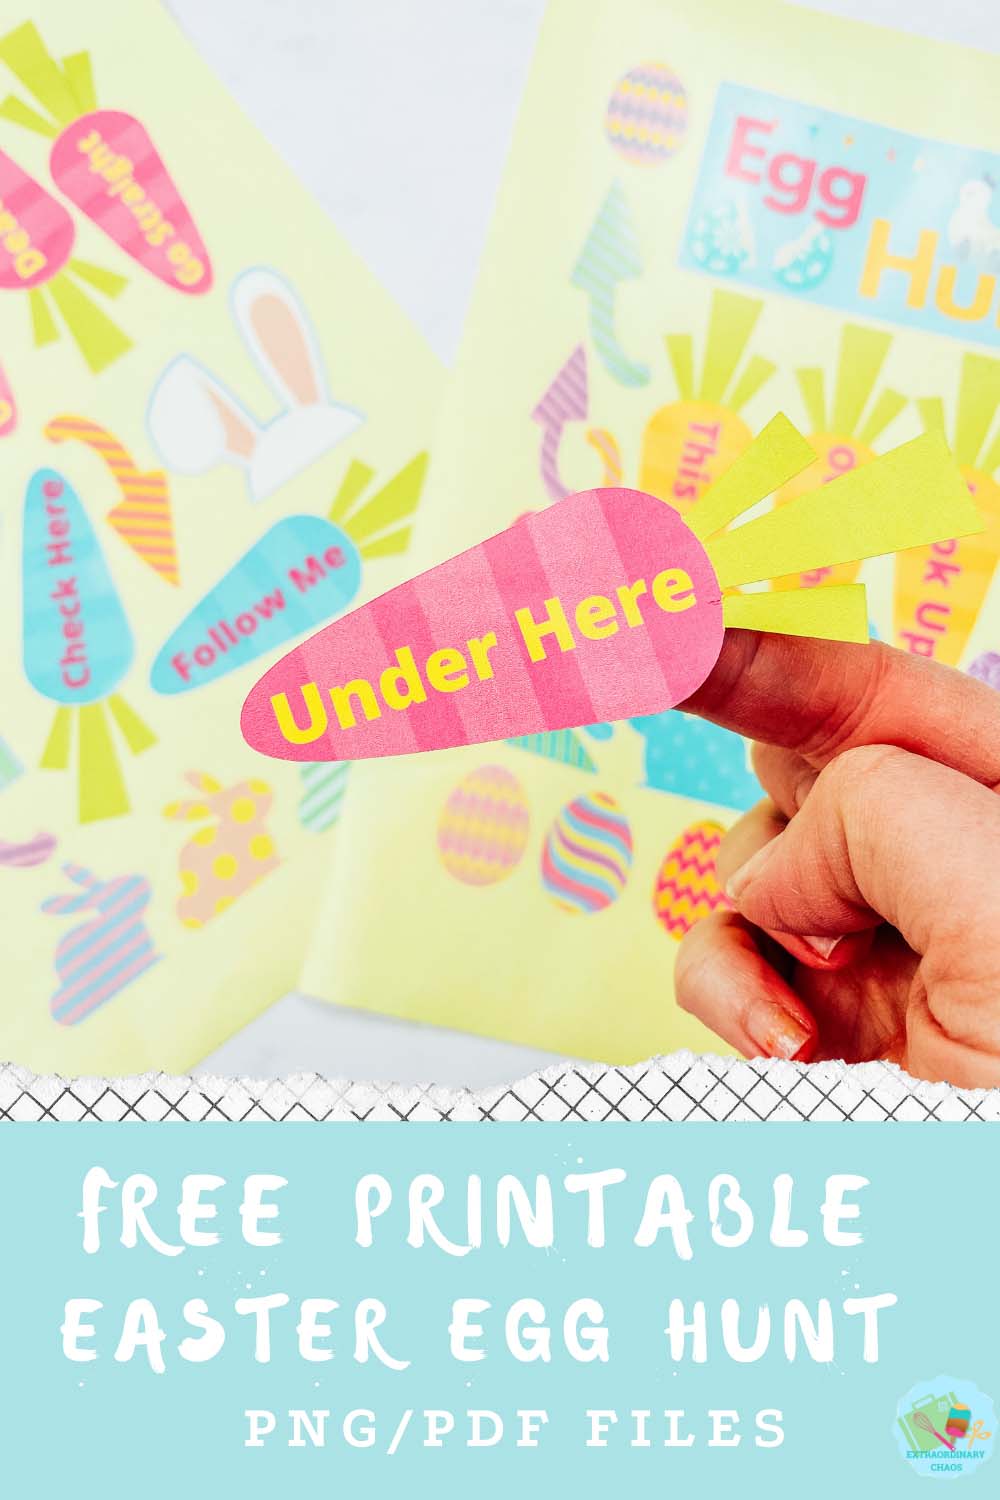 Free downloadable Cricut Free Print&Cut Easter egg hunt